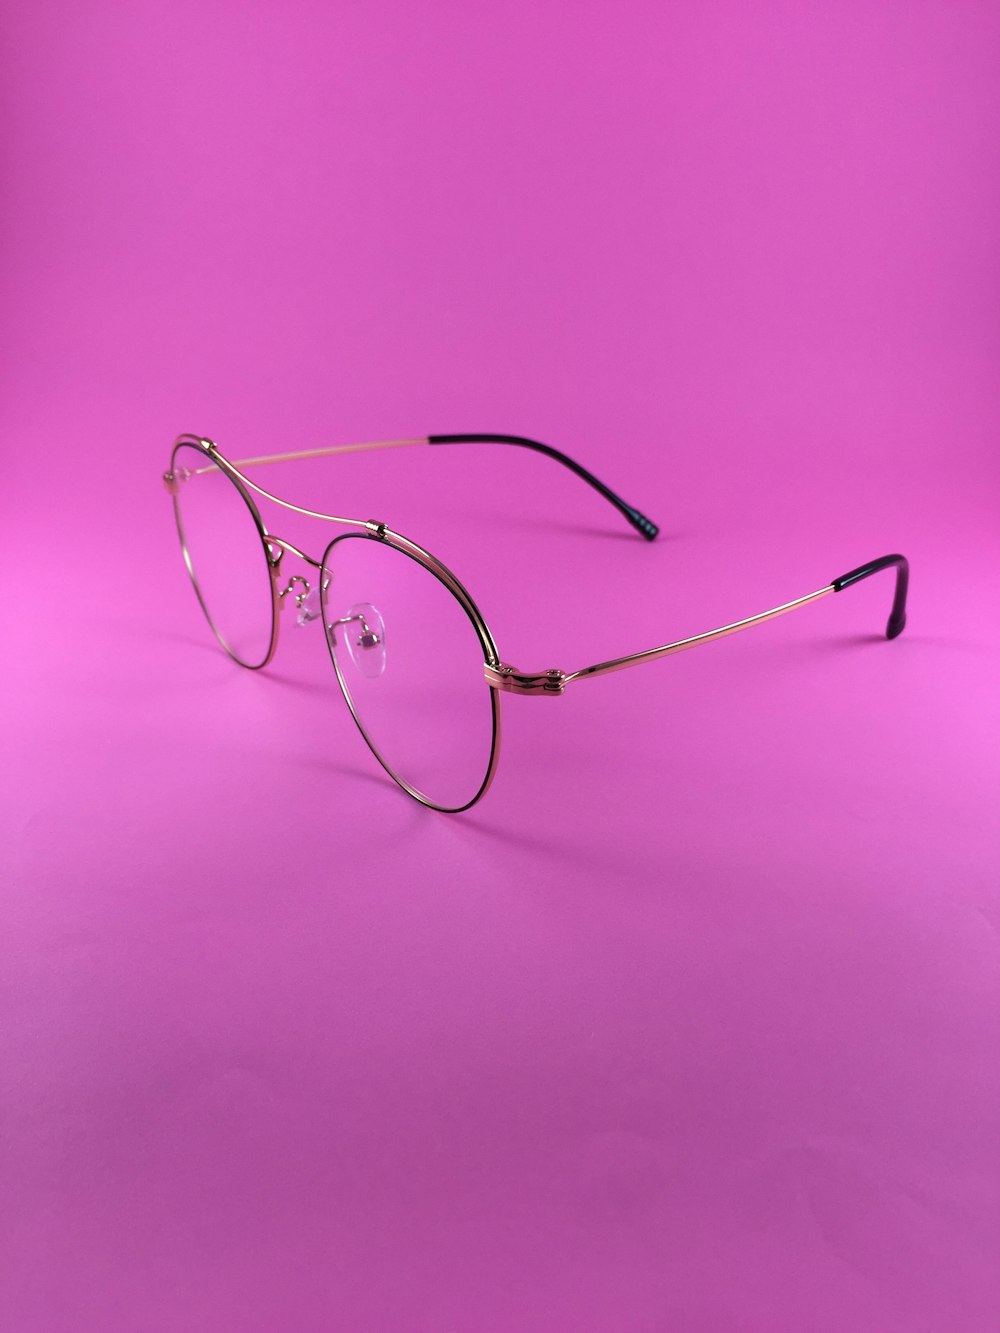 brown-framed eyeglasses